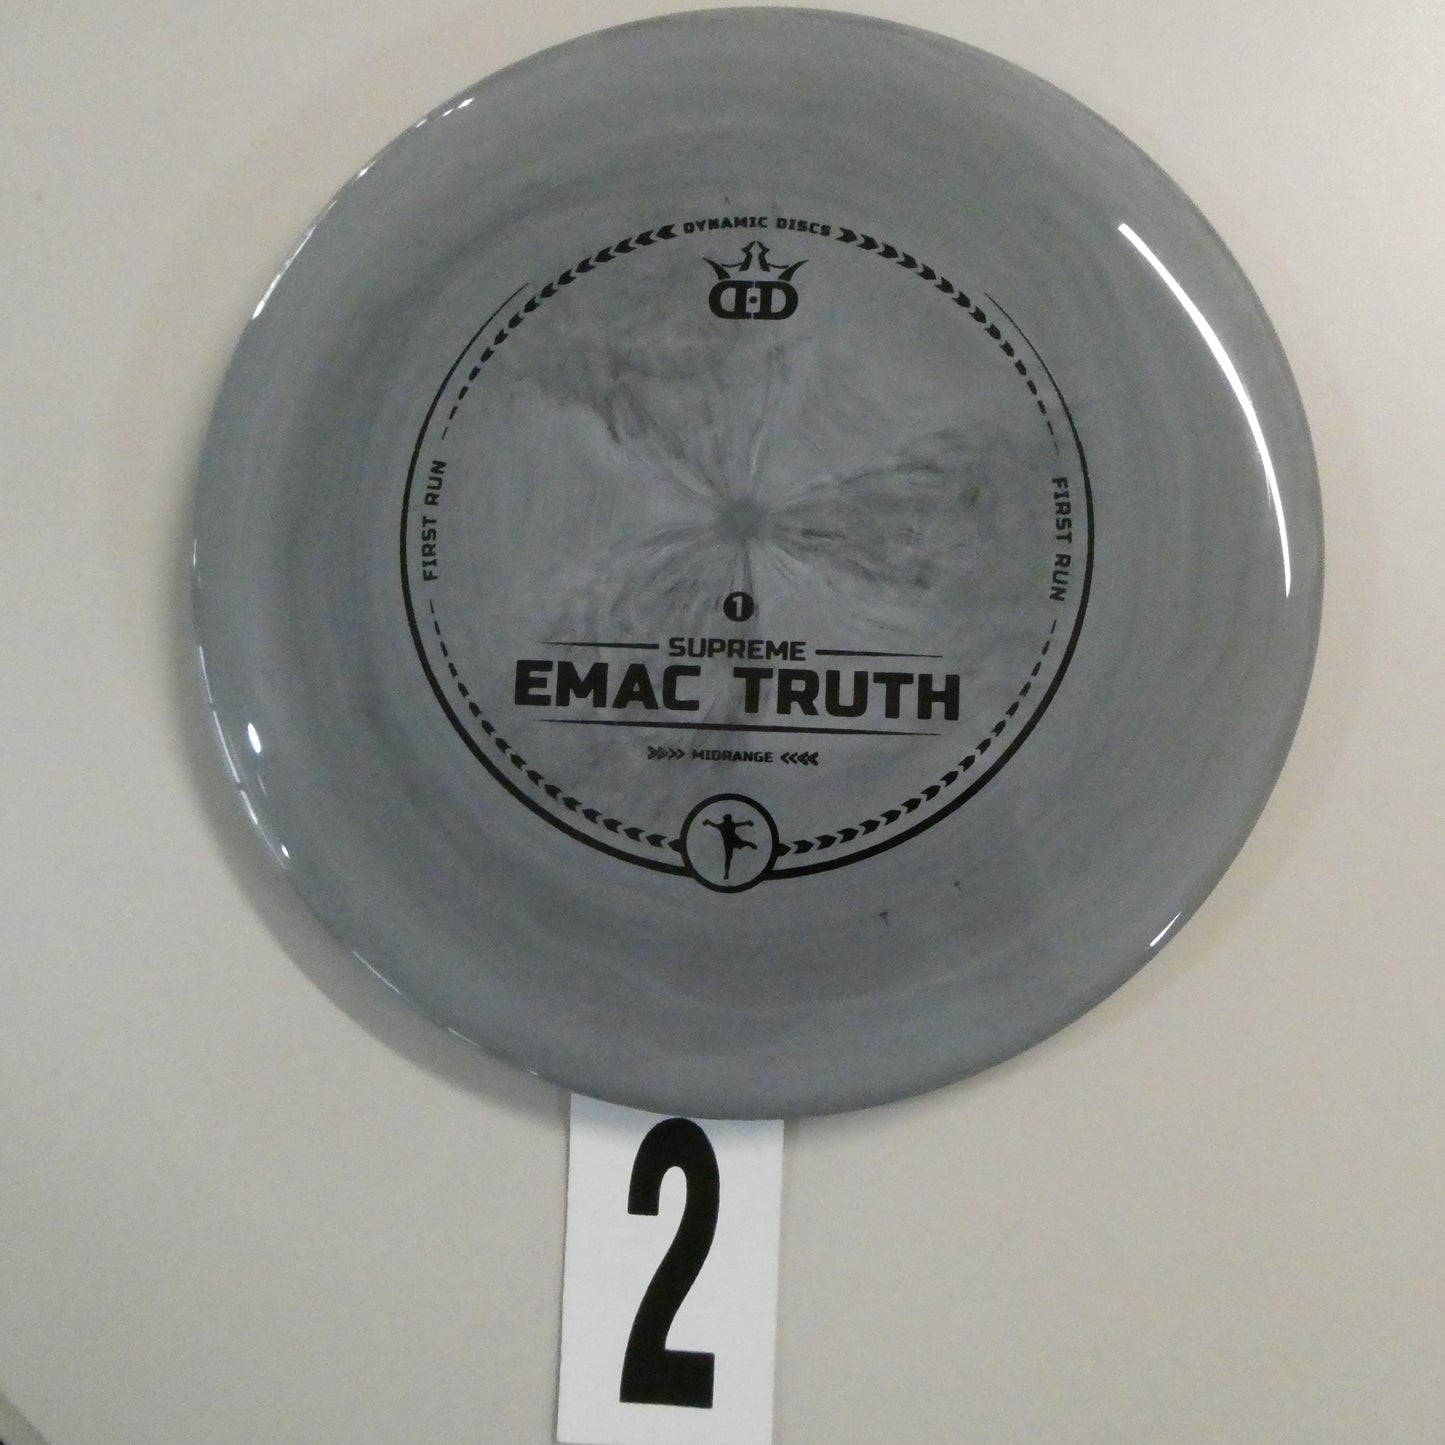 1st run Supreme Emac Truth